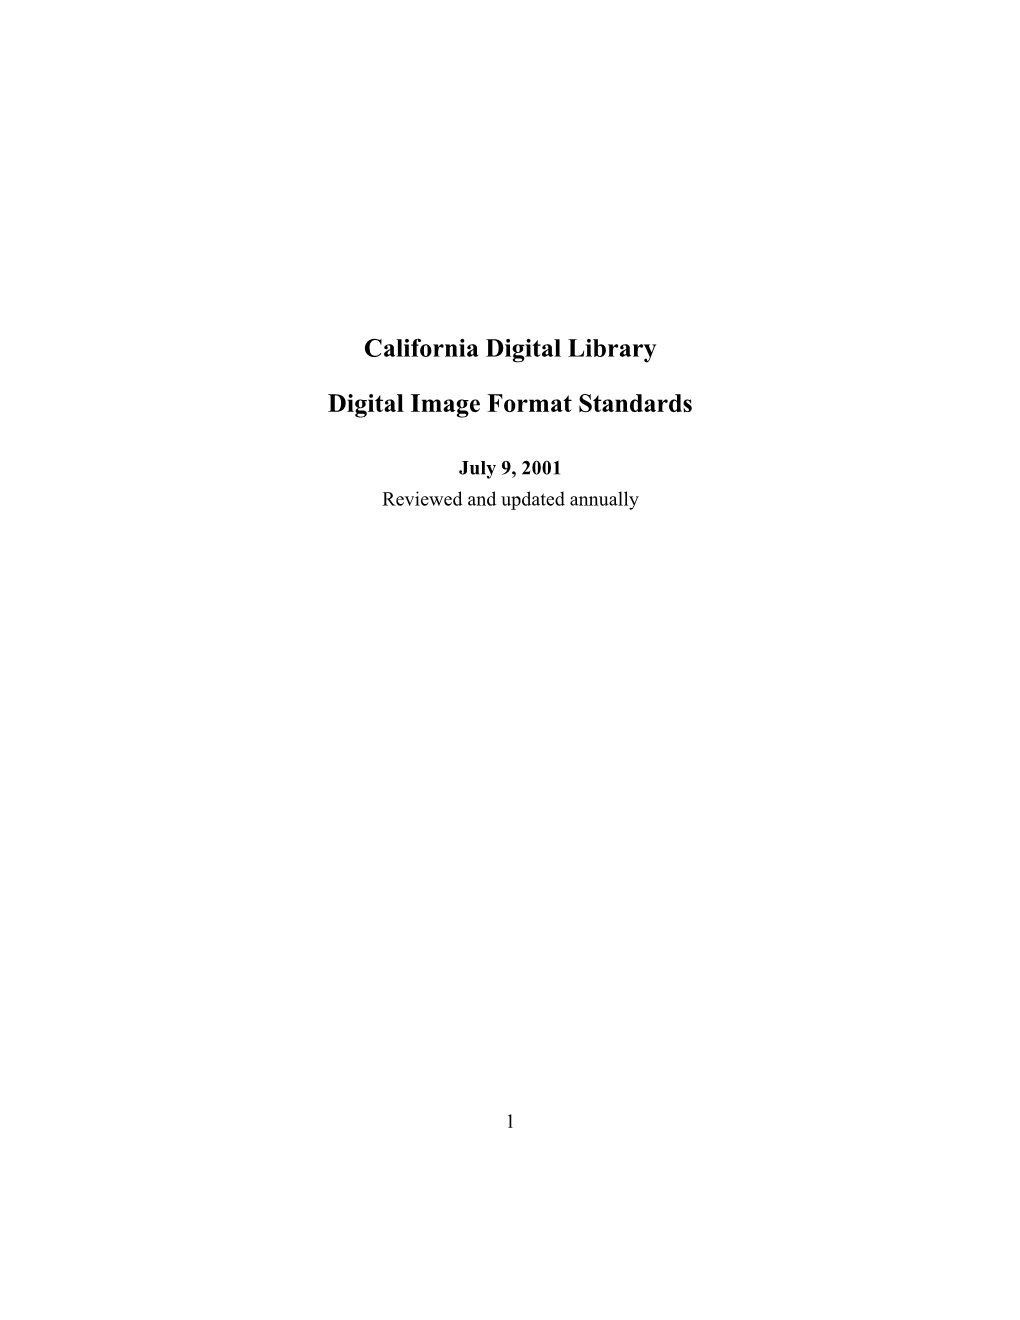 California Digital Library Digital Image Format Standards